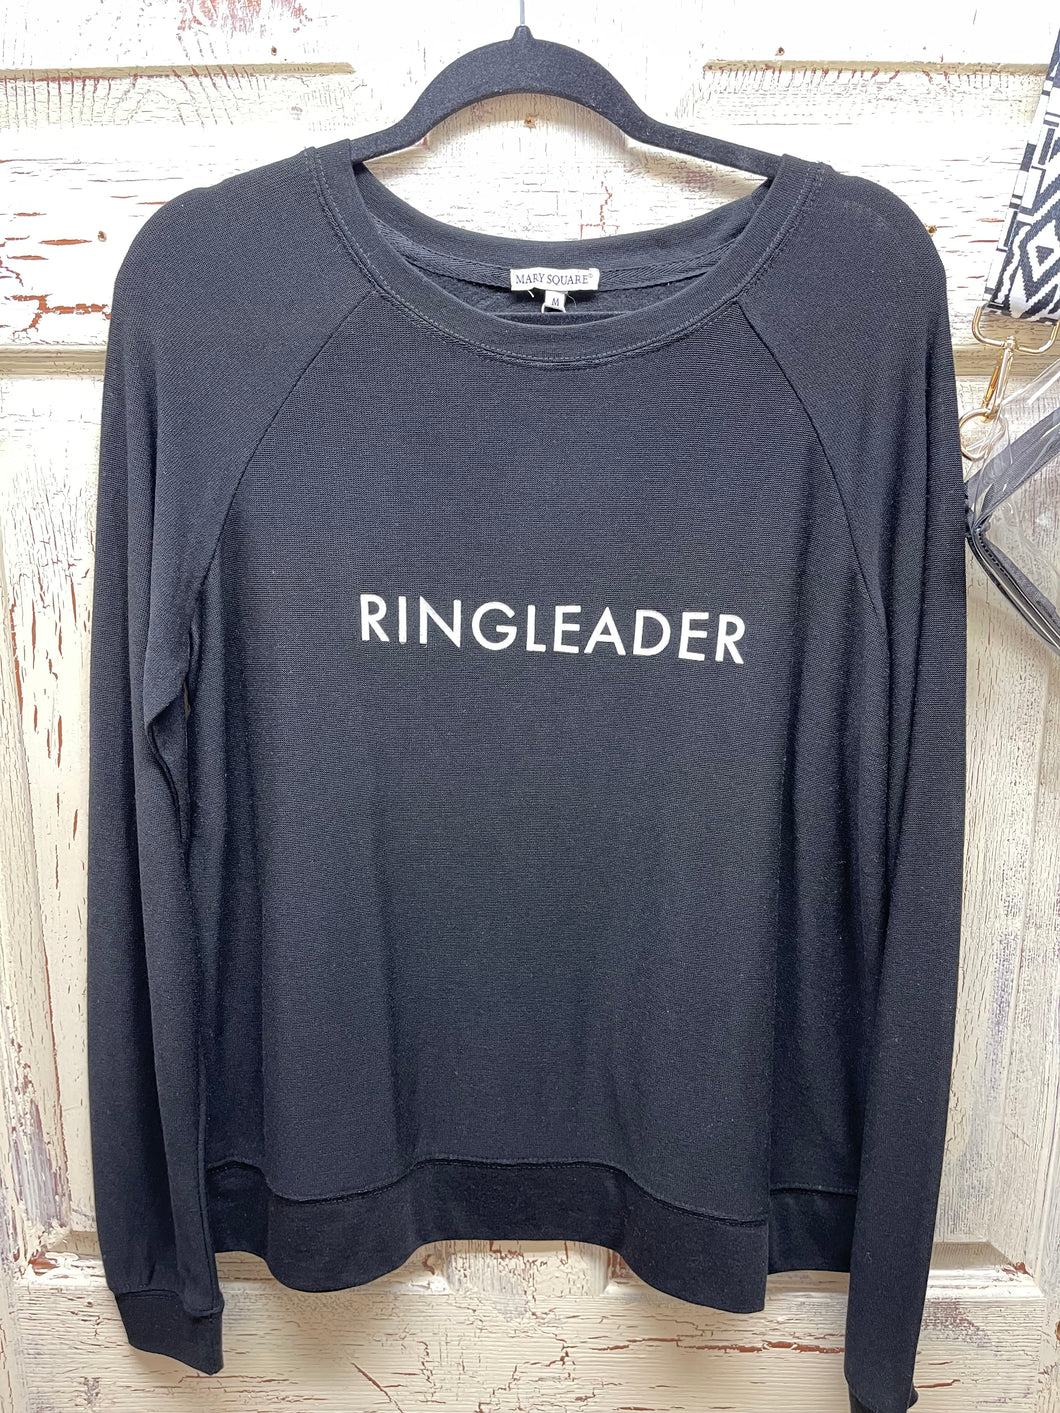 Ringleader- Sweatshirt